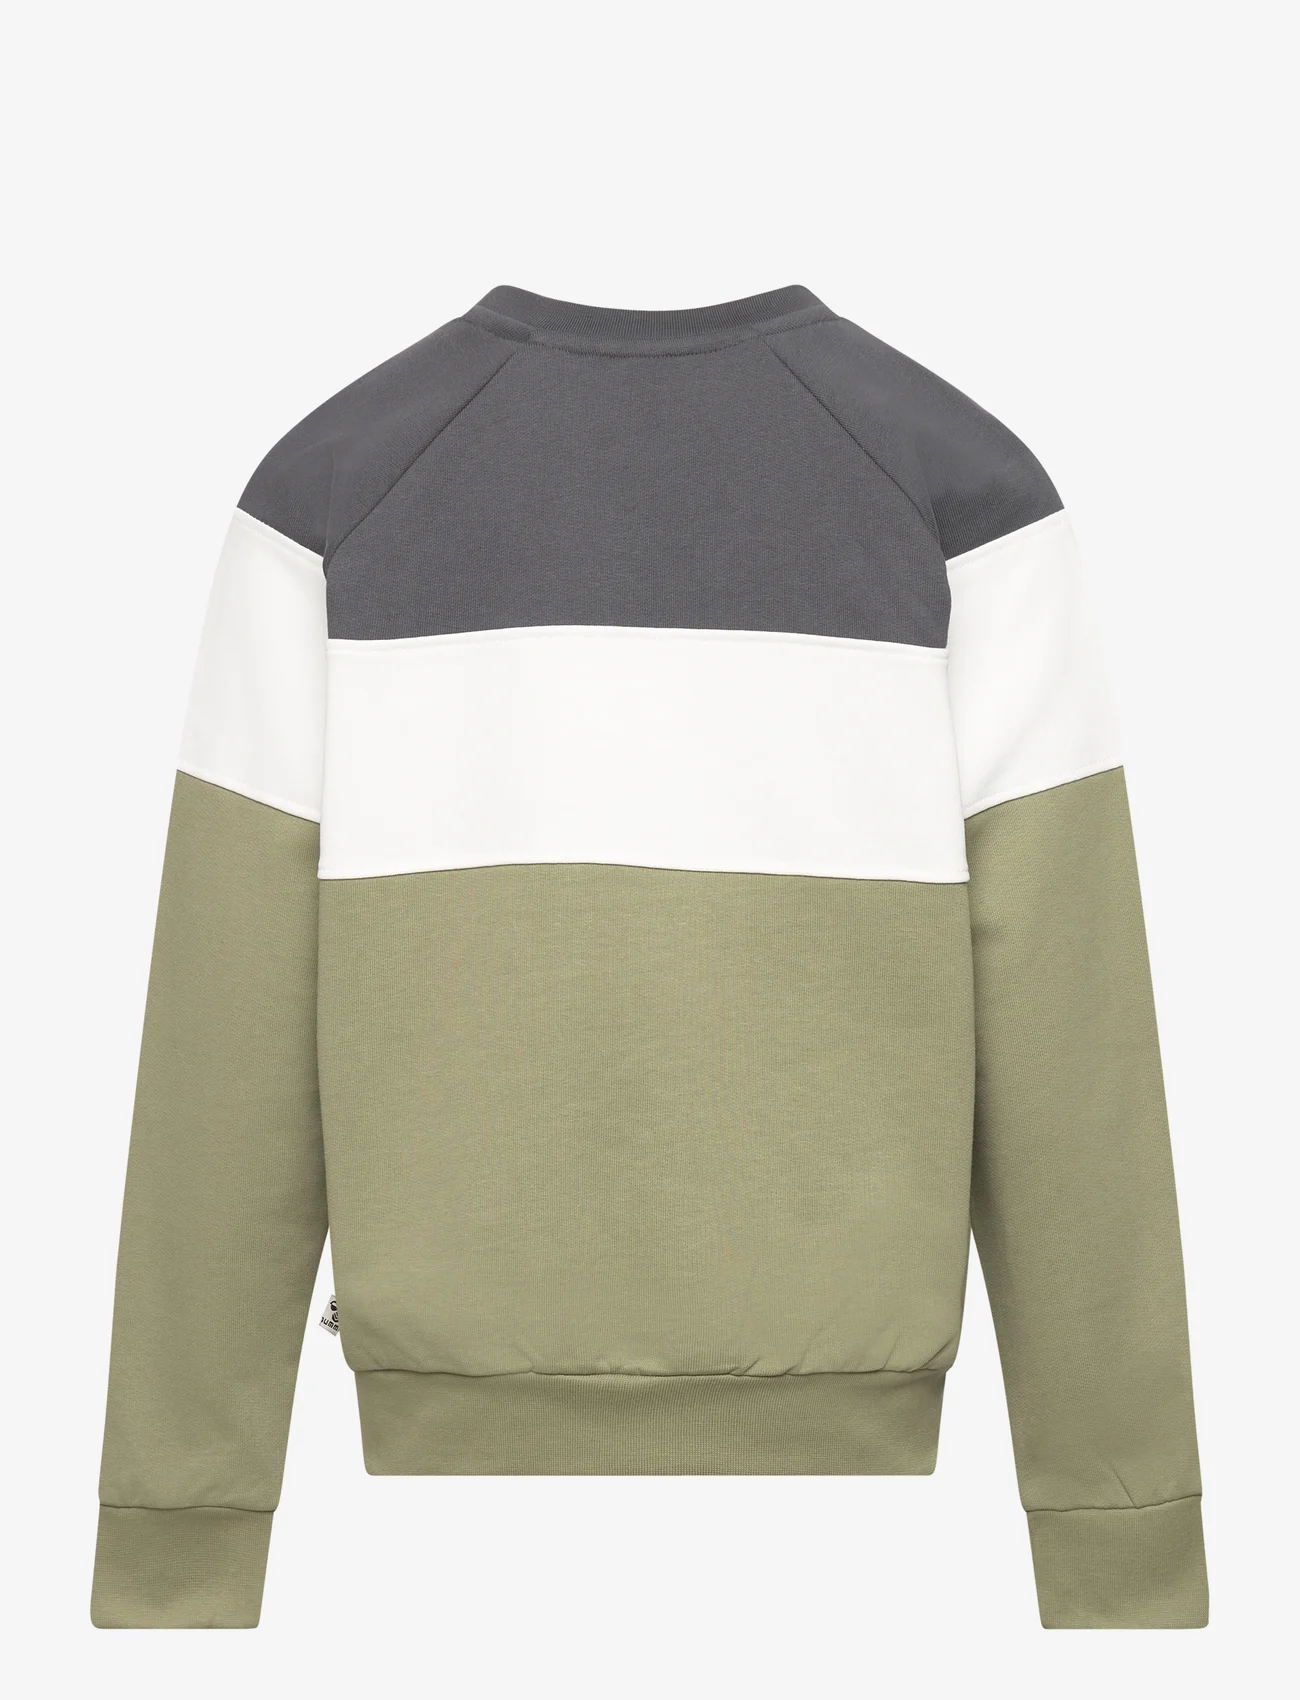 Hummel - hmlCLAES SWEATSHIRT - sweatshirts & hoodies - oil green - 1